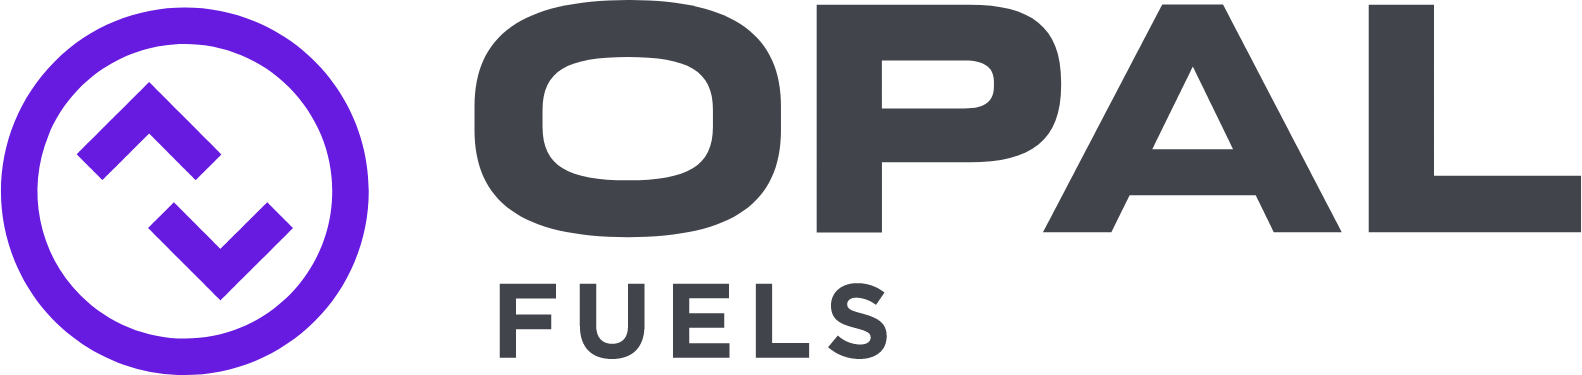 OPAL Fuels logo large (transparent PNG)